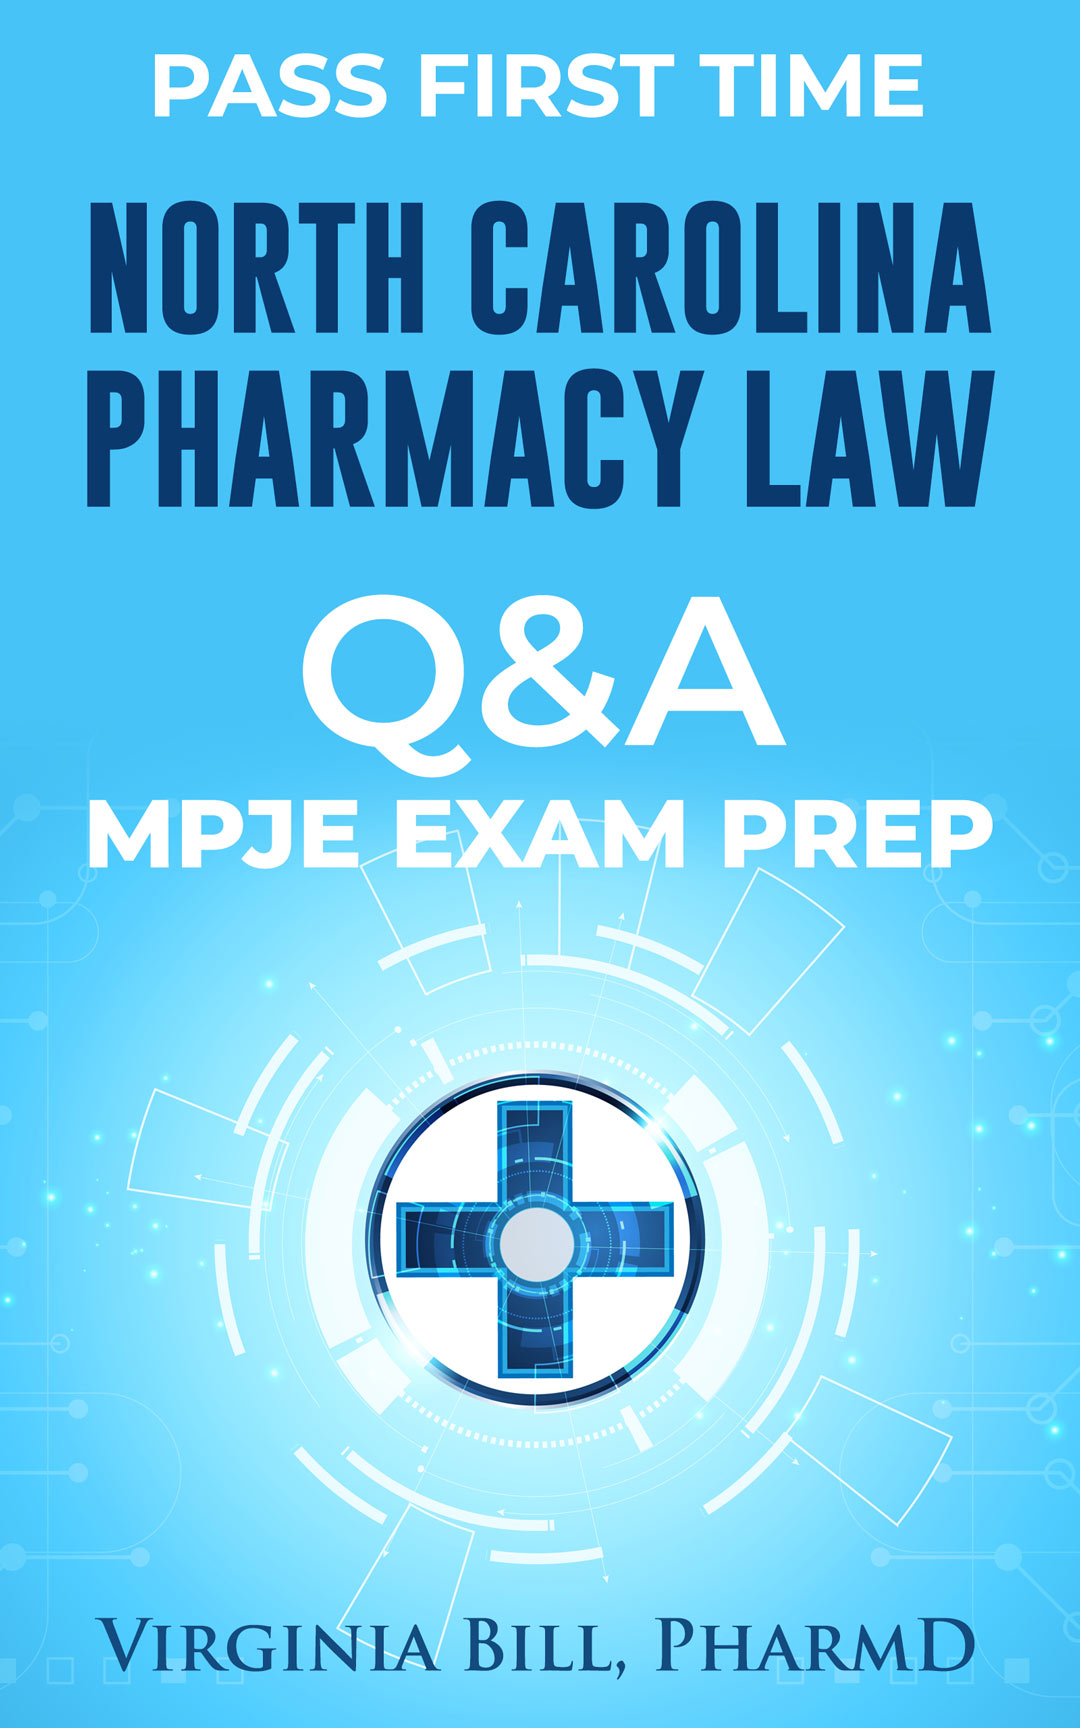 North-Carolina Pharmacy Law MPJE Exam Prep Q & A